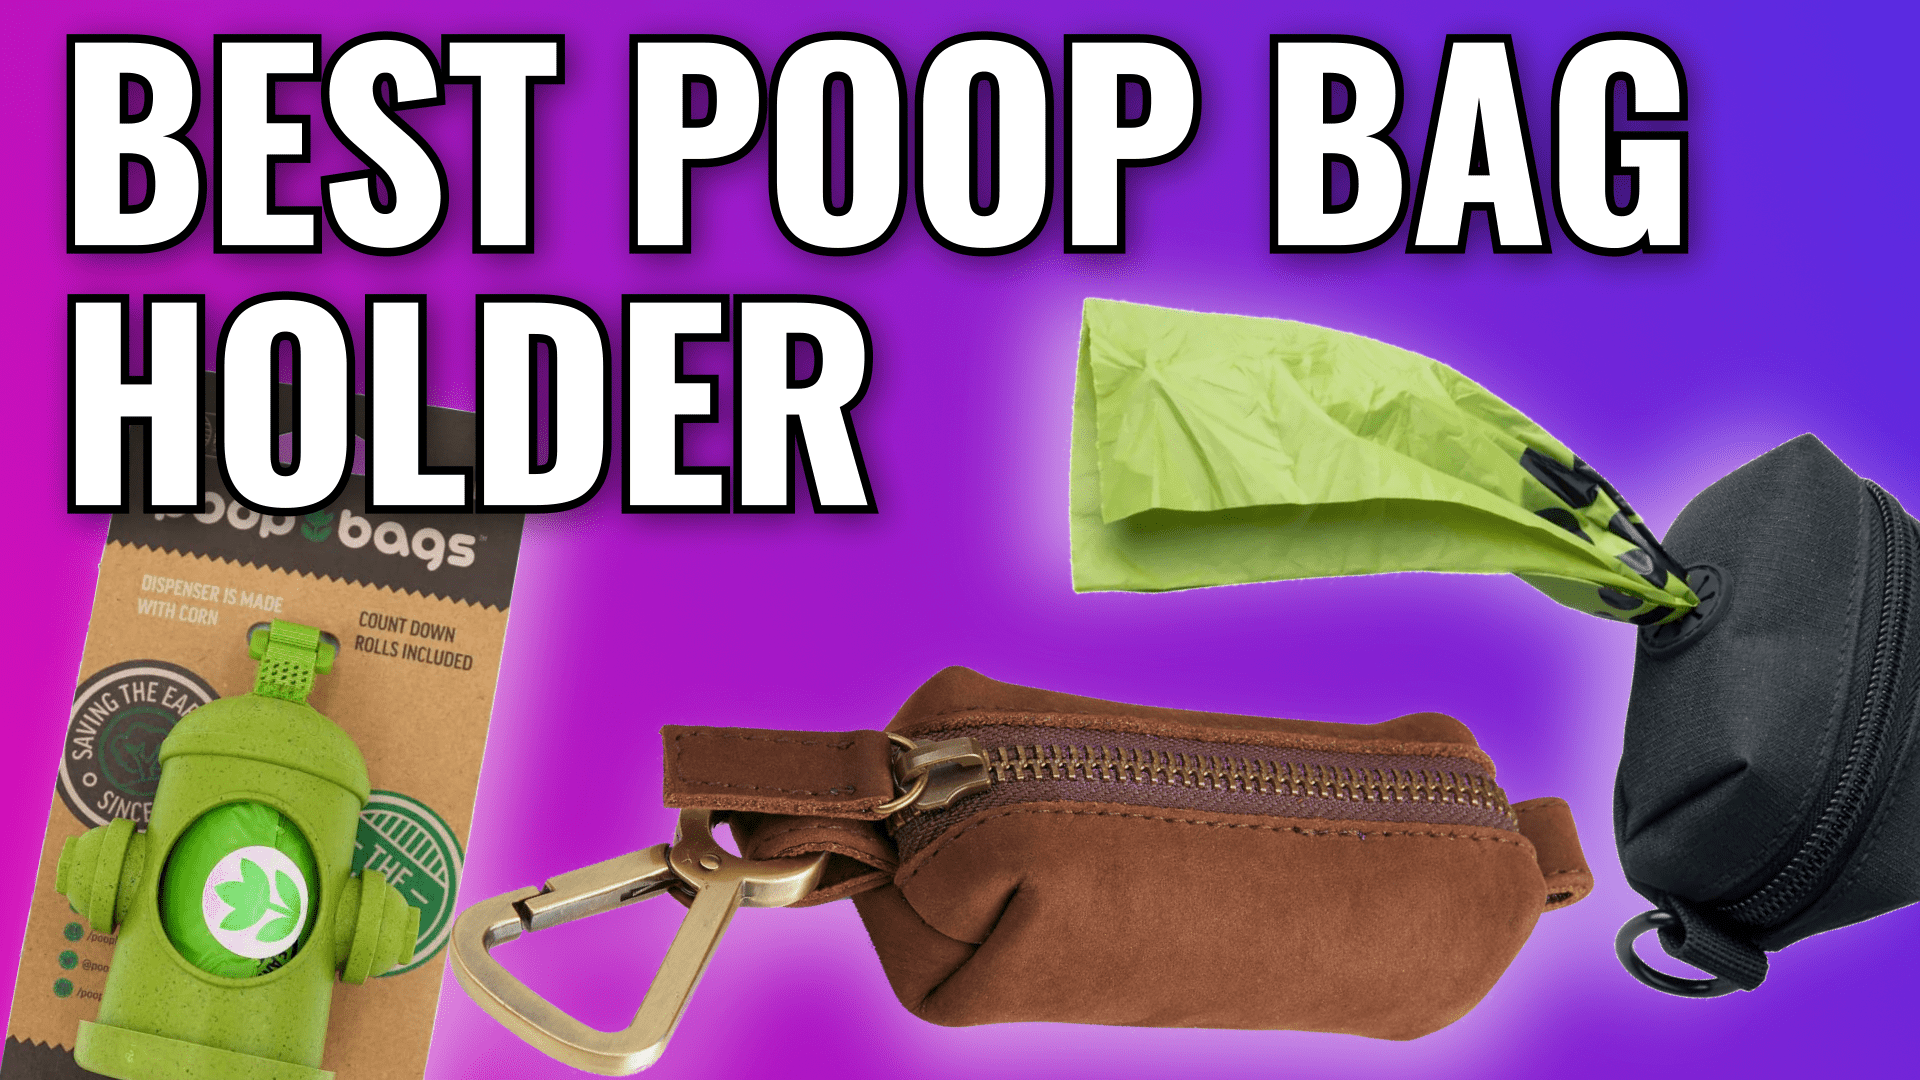 Leather Dog Poop Bag Holder - Purple and Pink - RYAN London